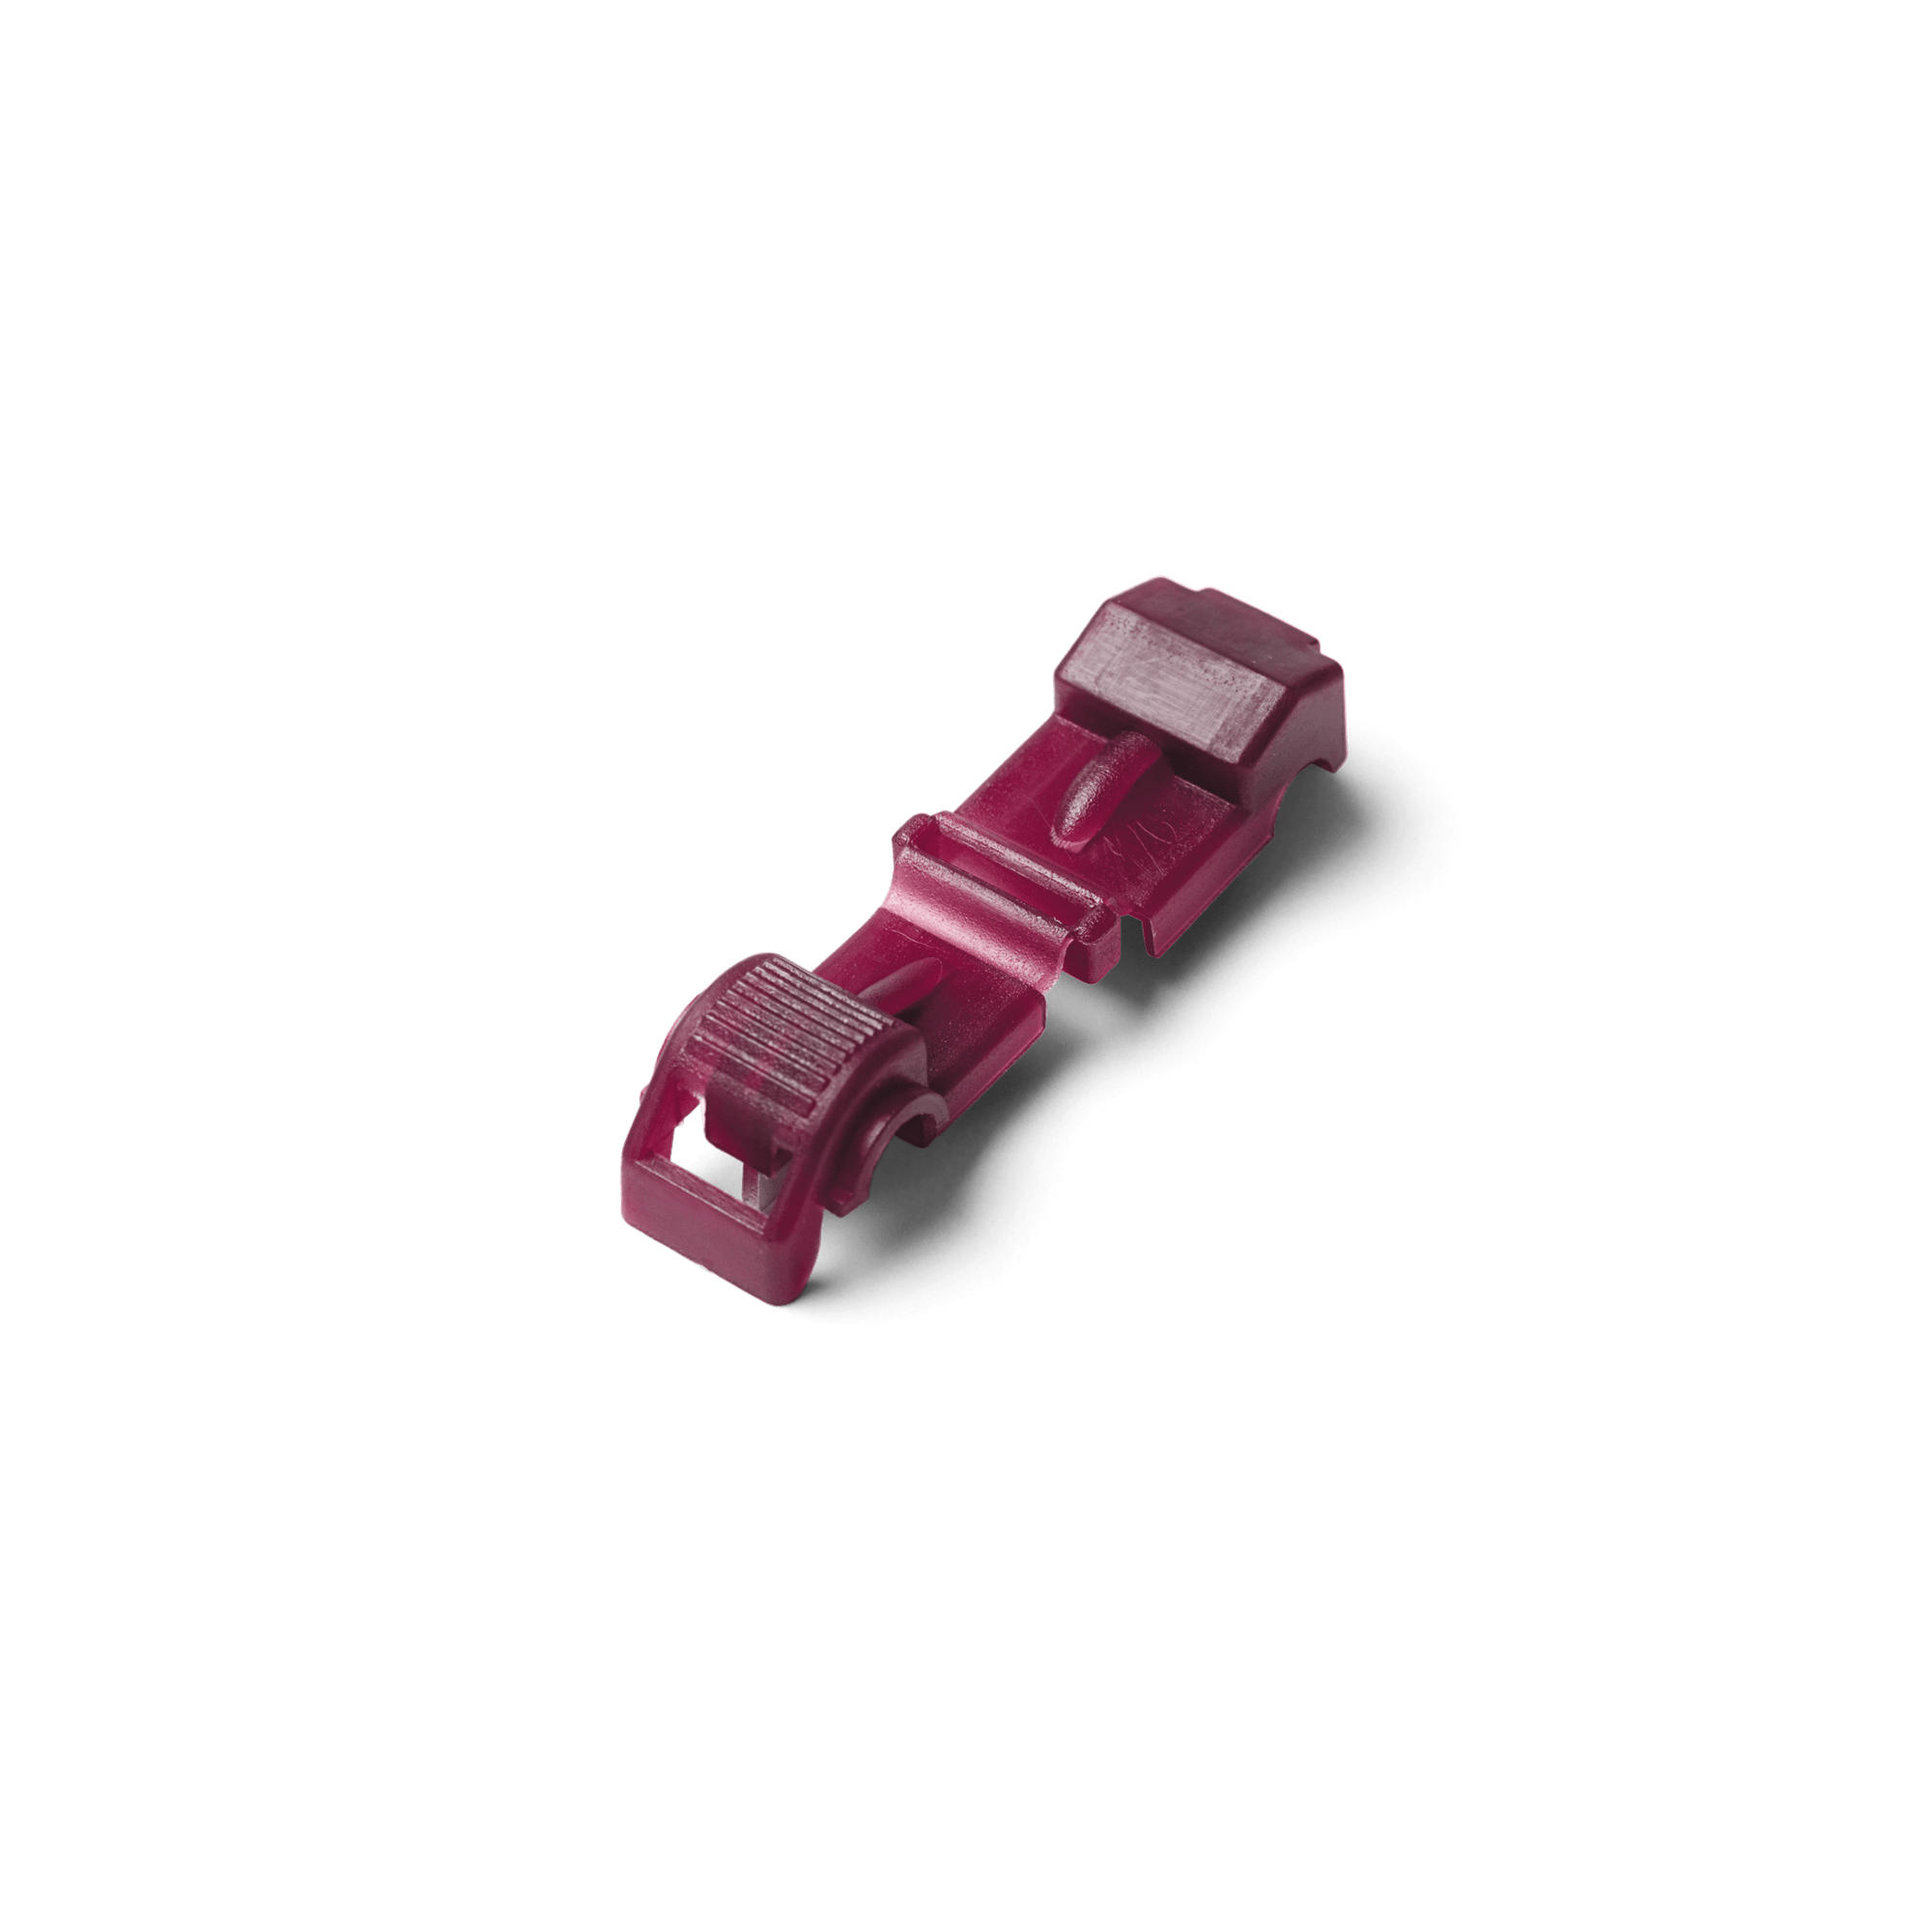 Image for Husqvarna Automower® Connector from HusqvarnaB2C